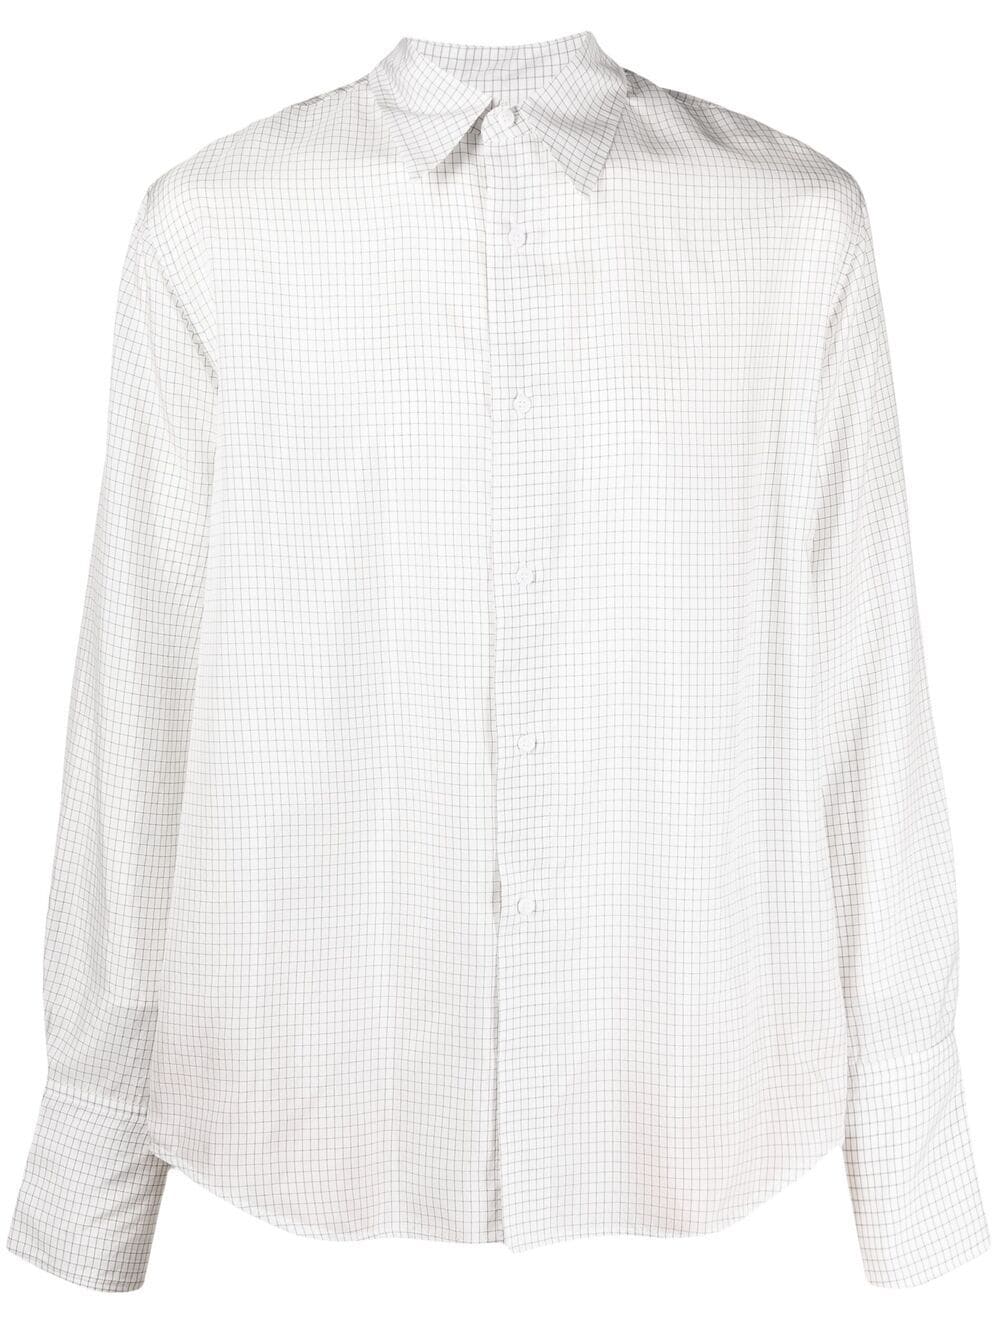 Christian Wijnants Grid-check Shirt In White